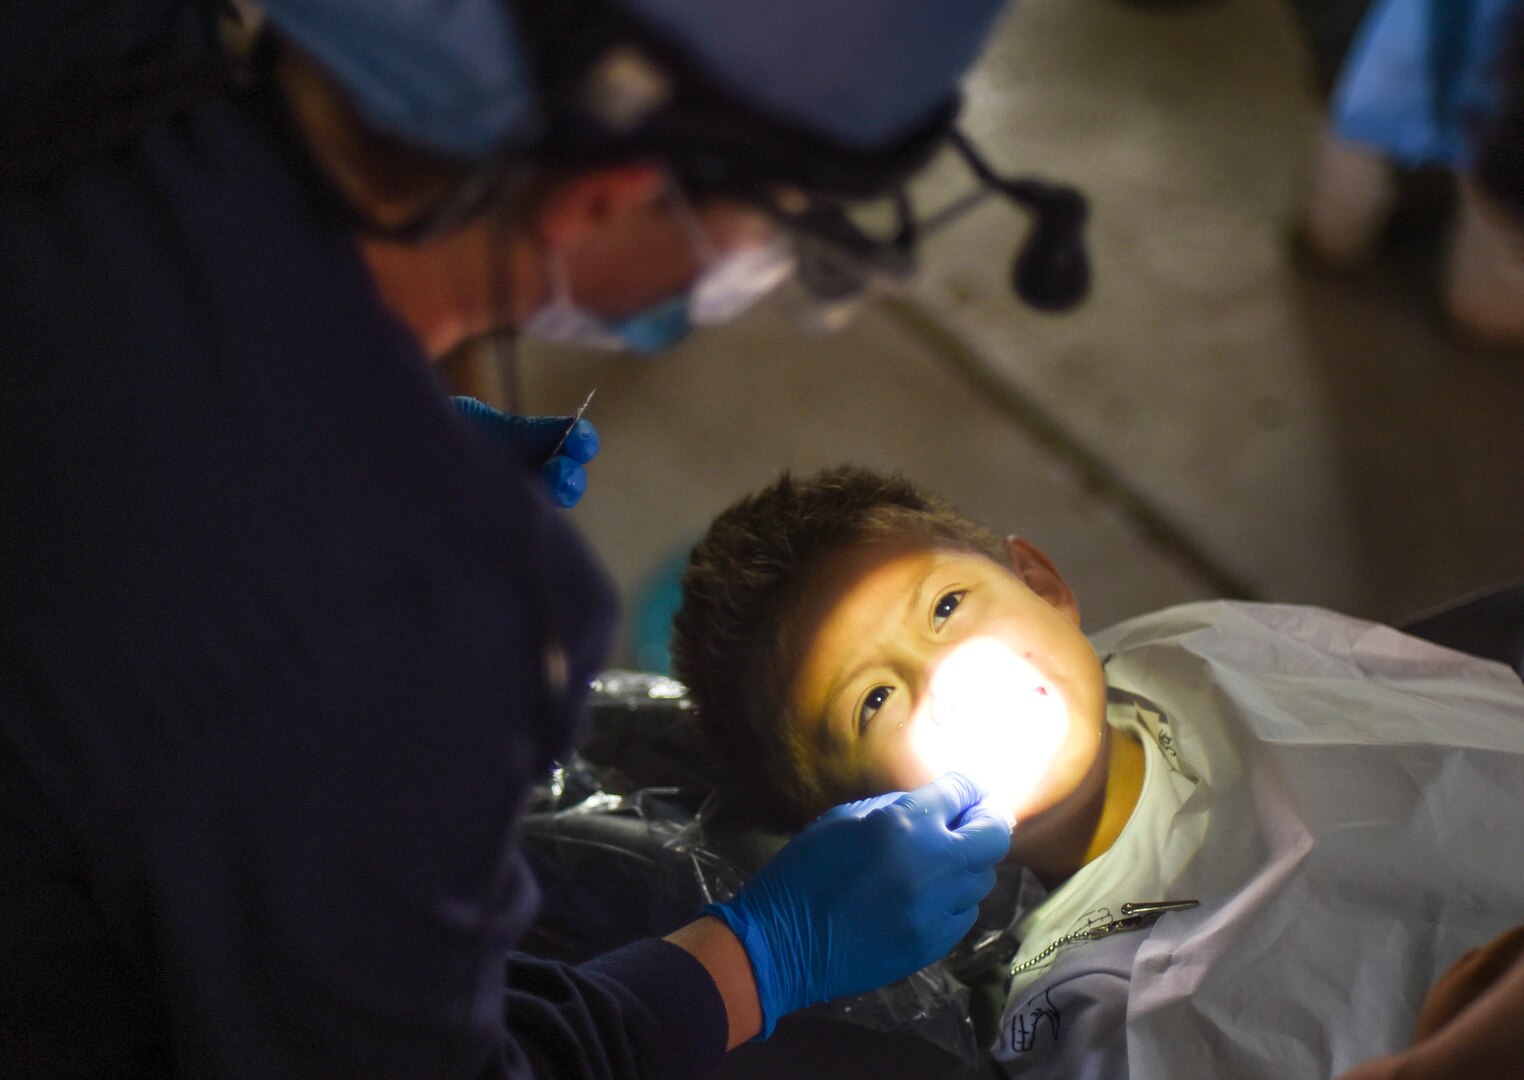 An Air Force dentist treats a patient